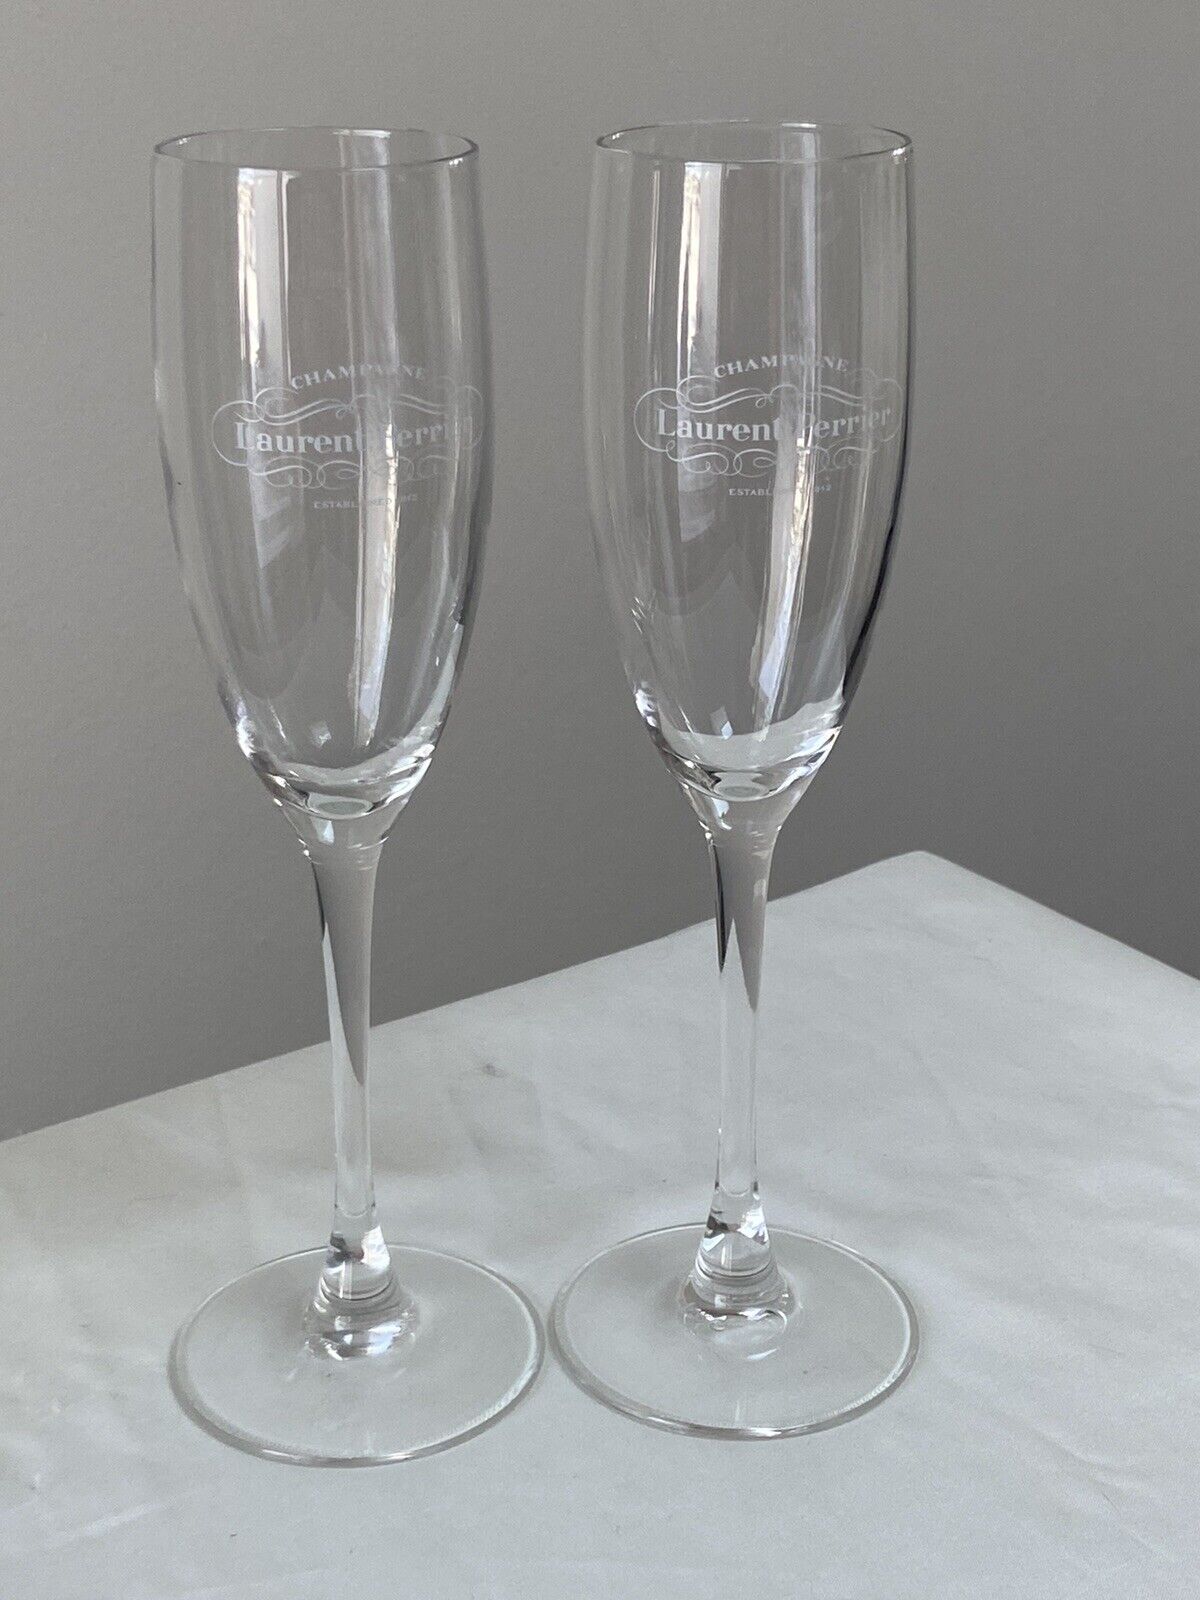 Laurent Perrier Champagne Glasses Set of 2